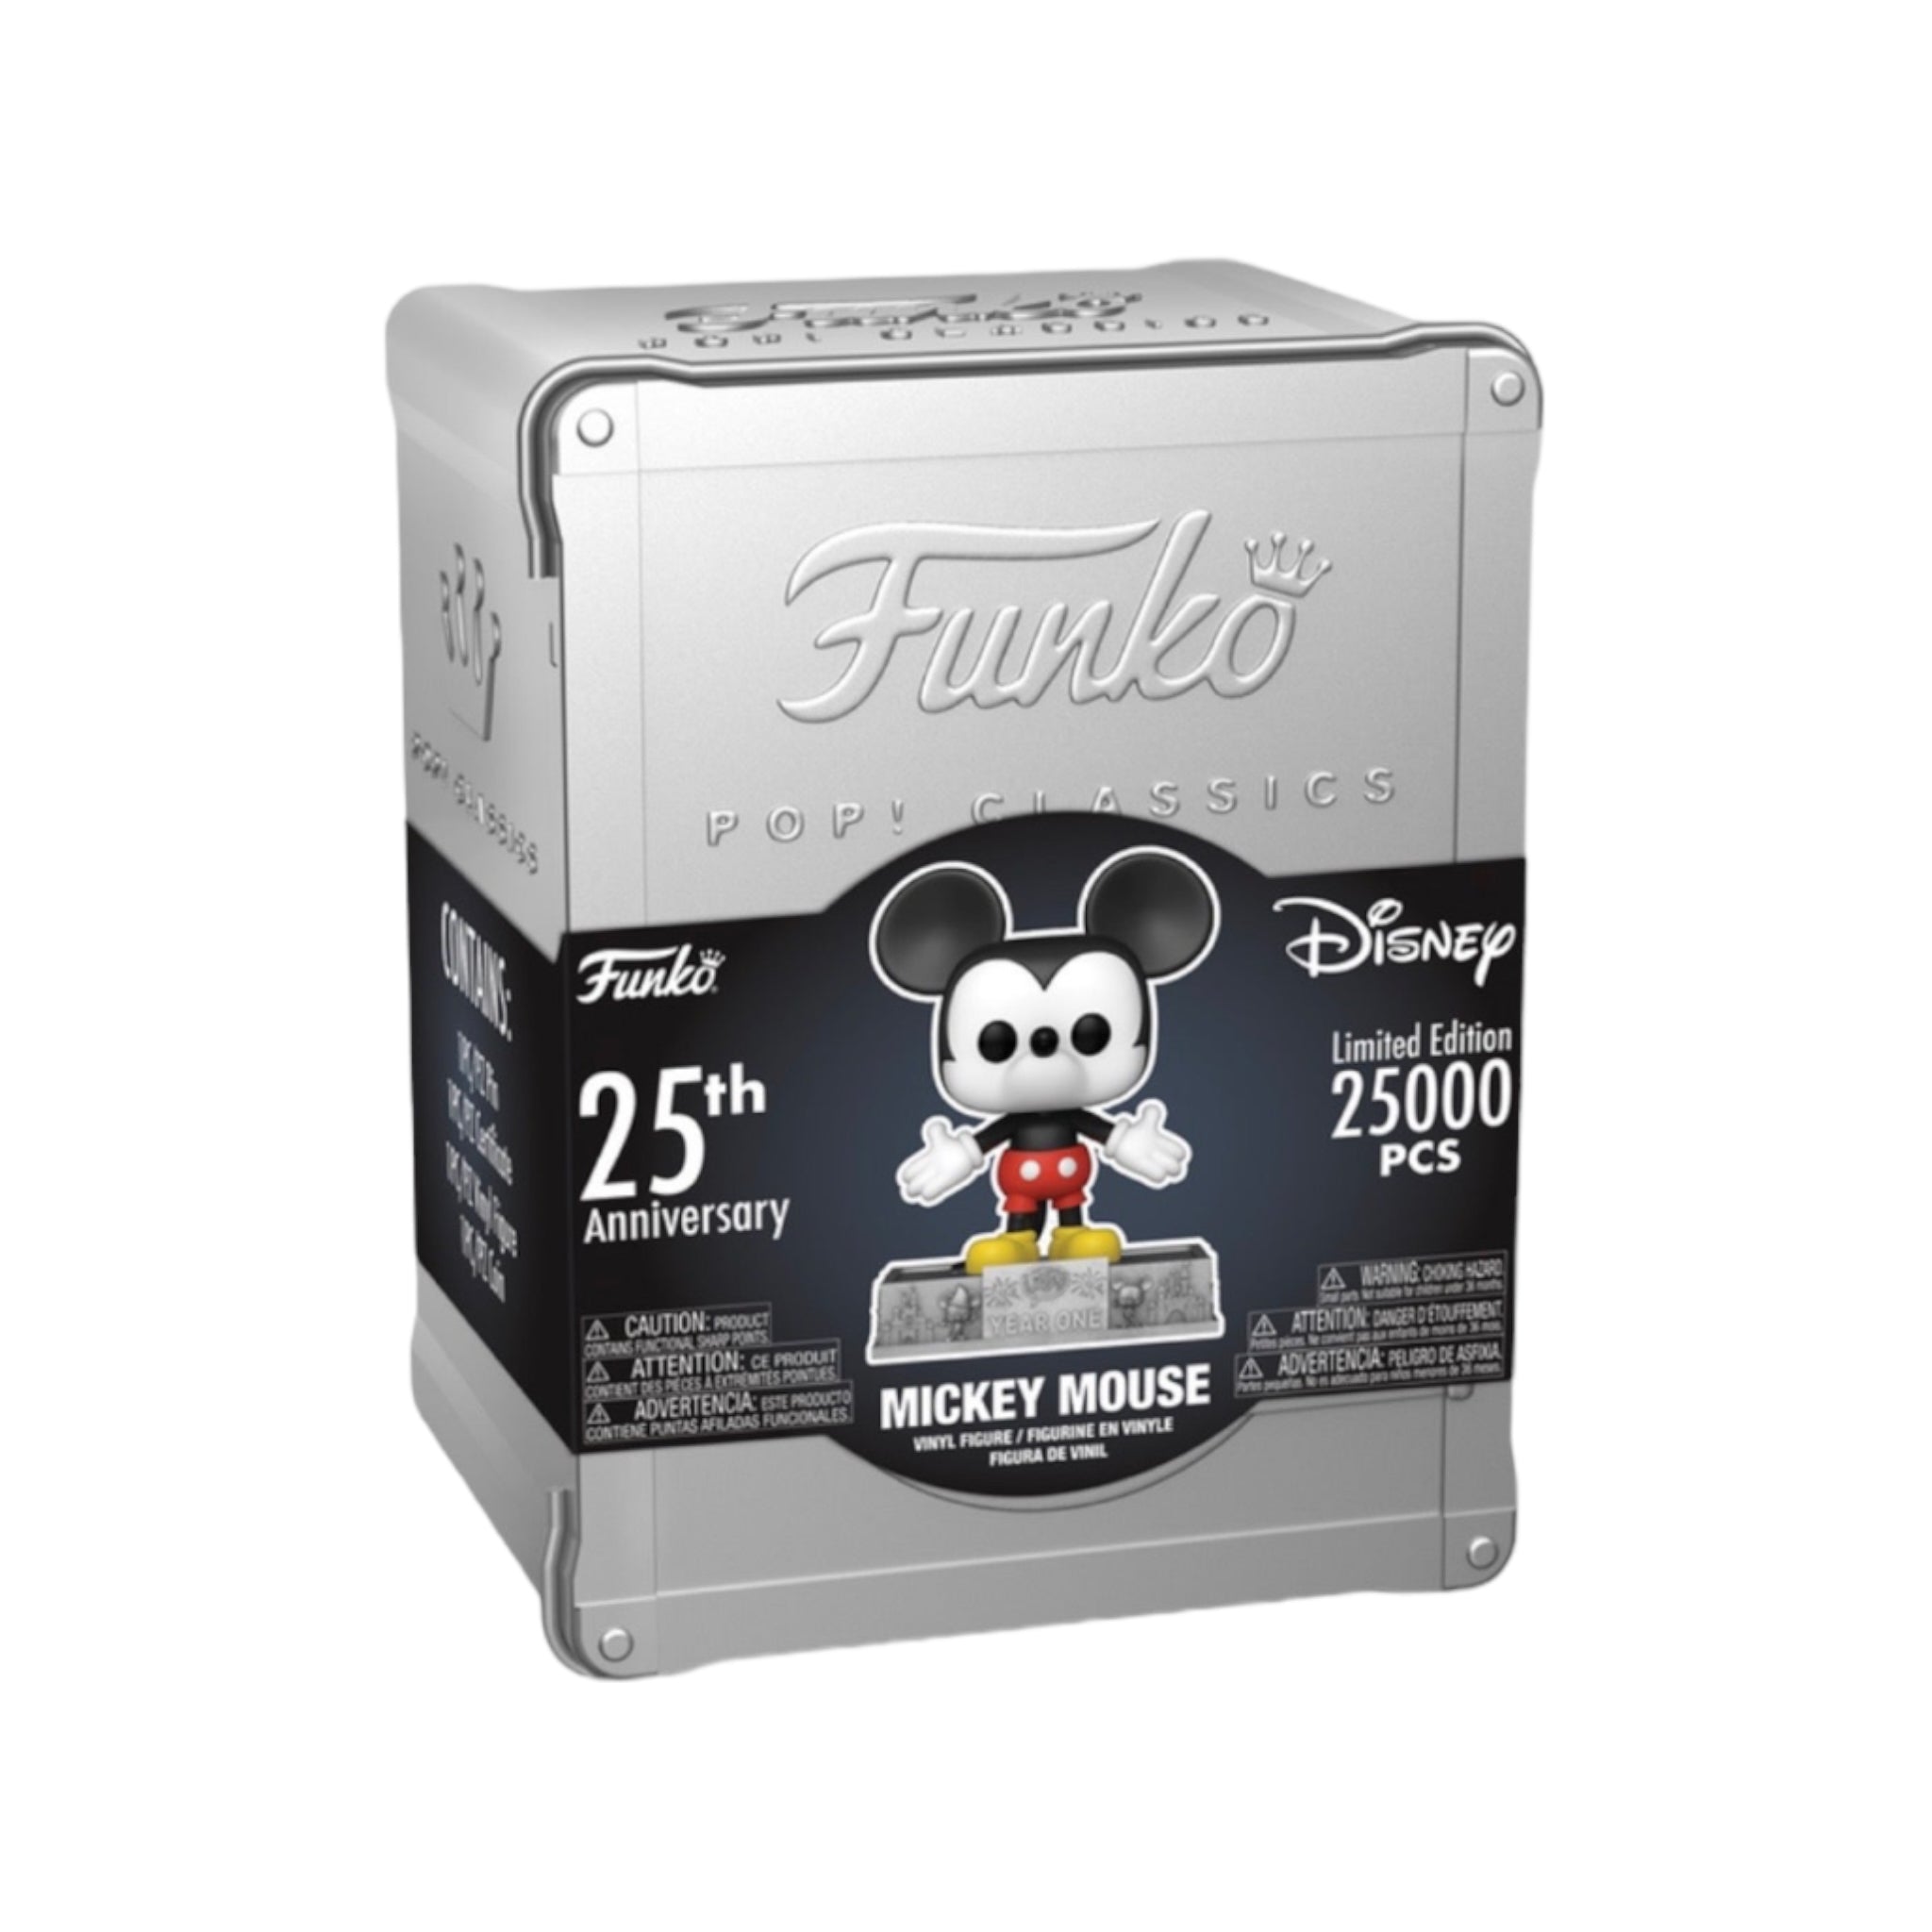 Mickey Mouse 25th Anniversary Funko Pop Classics! - Disney - Funko Shop Exclusive LE25000 Pcs - Sealed